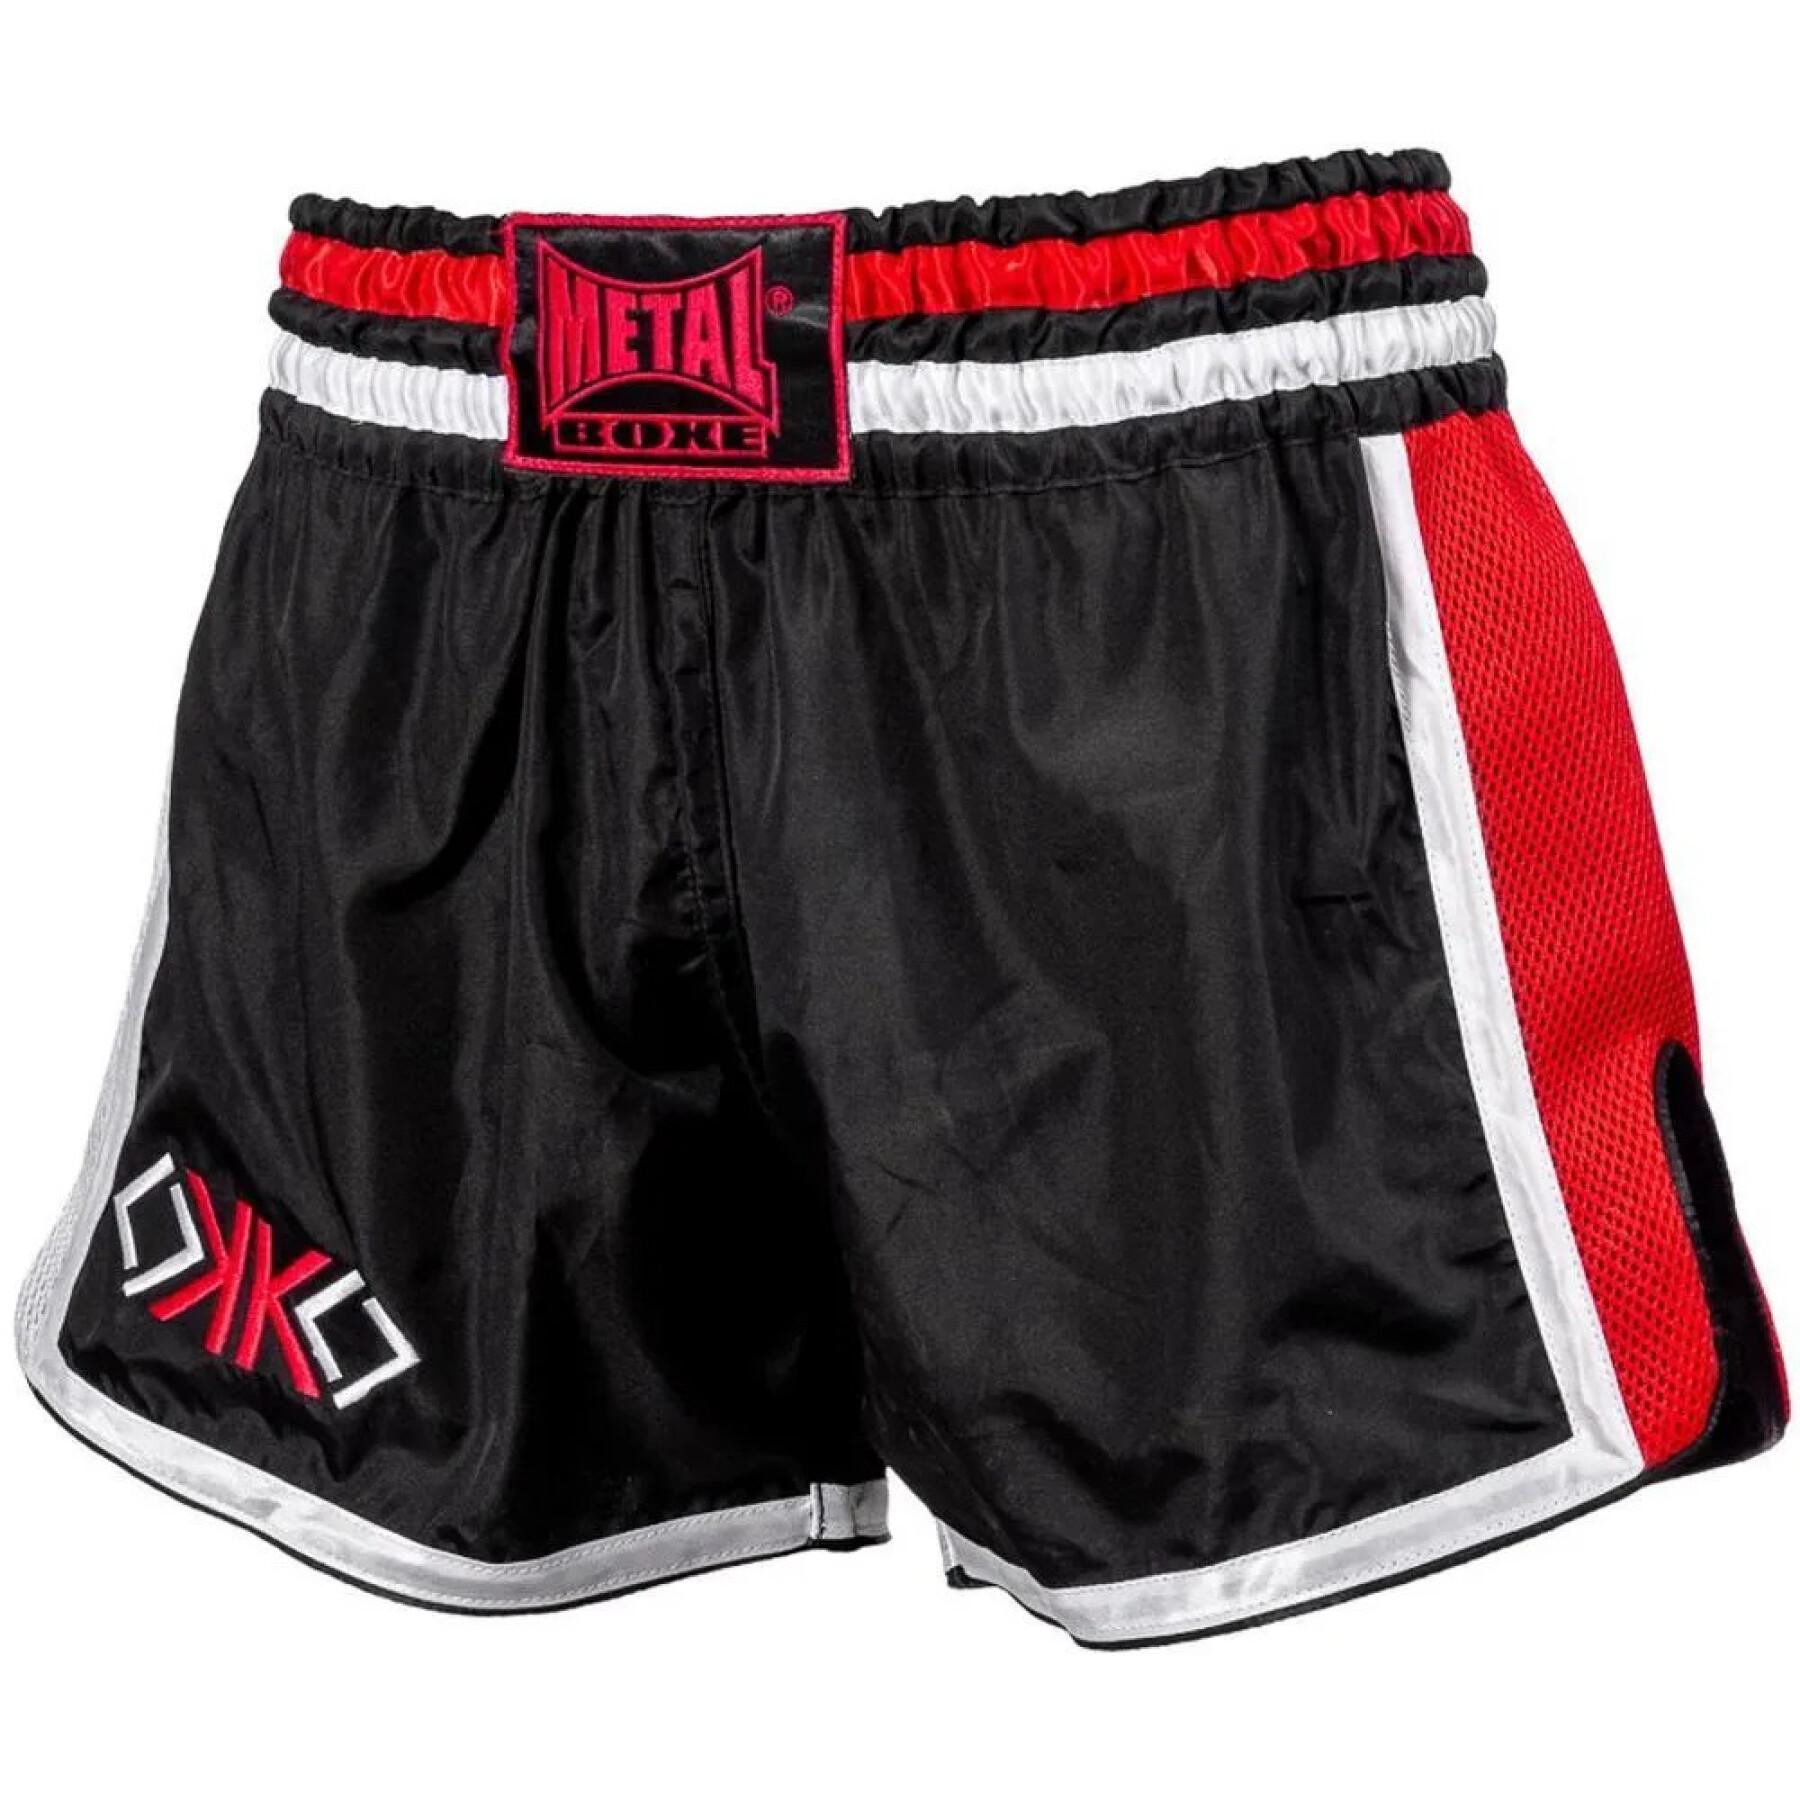 Thai-Boxing Shorts Metal Boxe